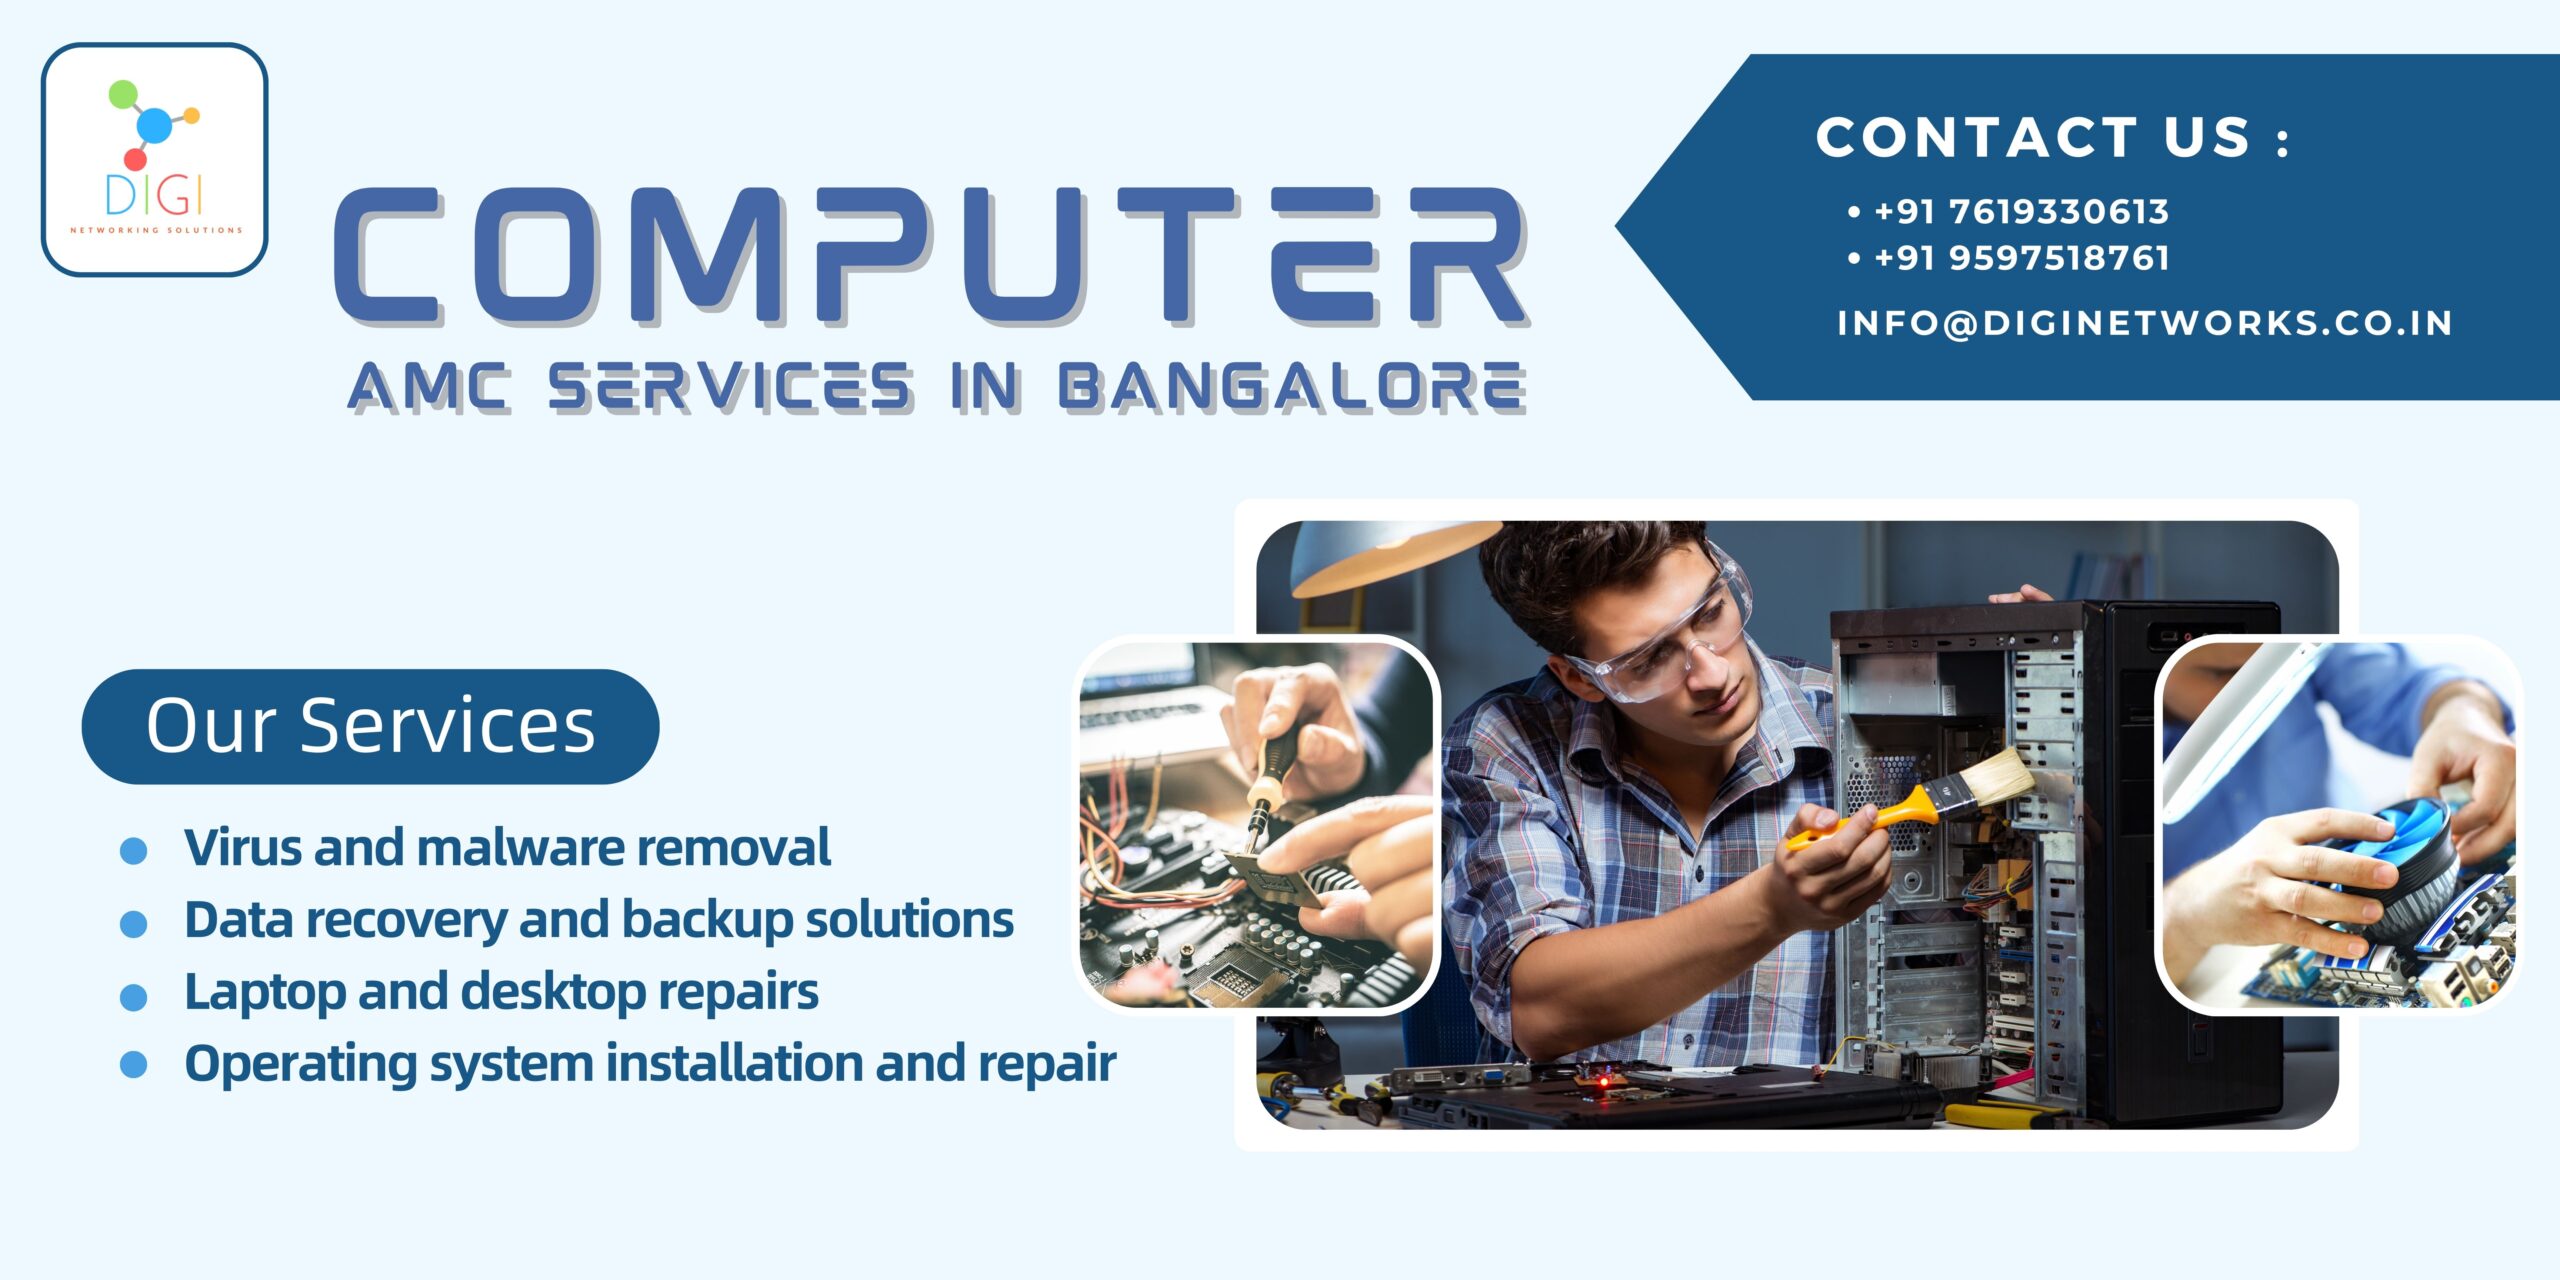 Computer AMC Services in Bangalore